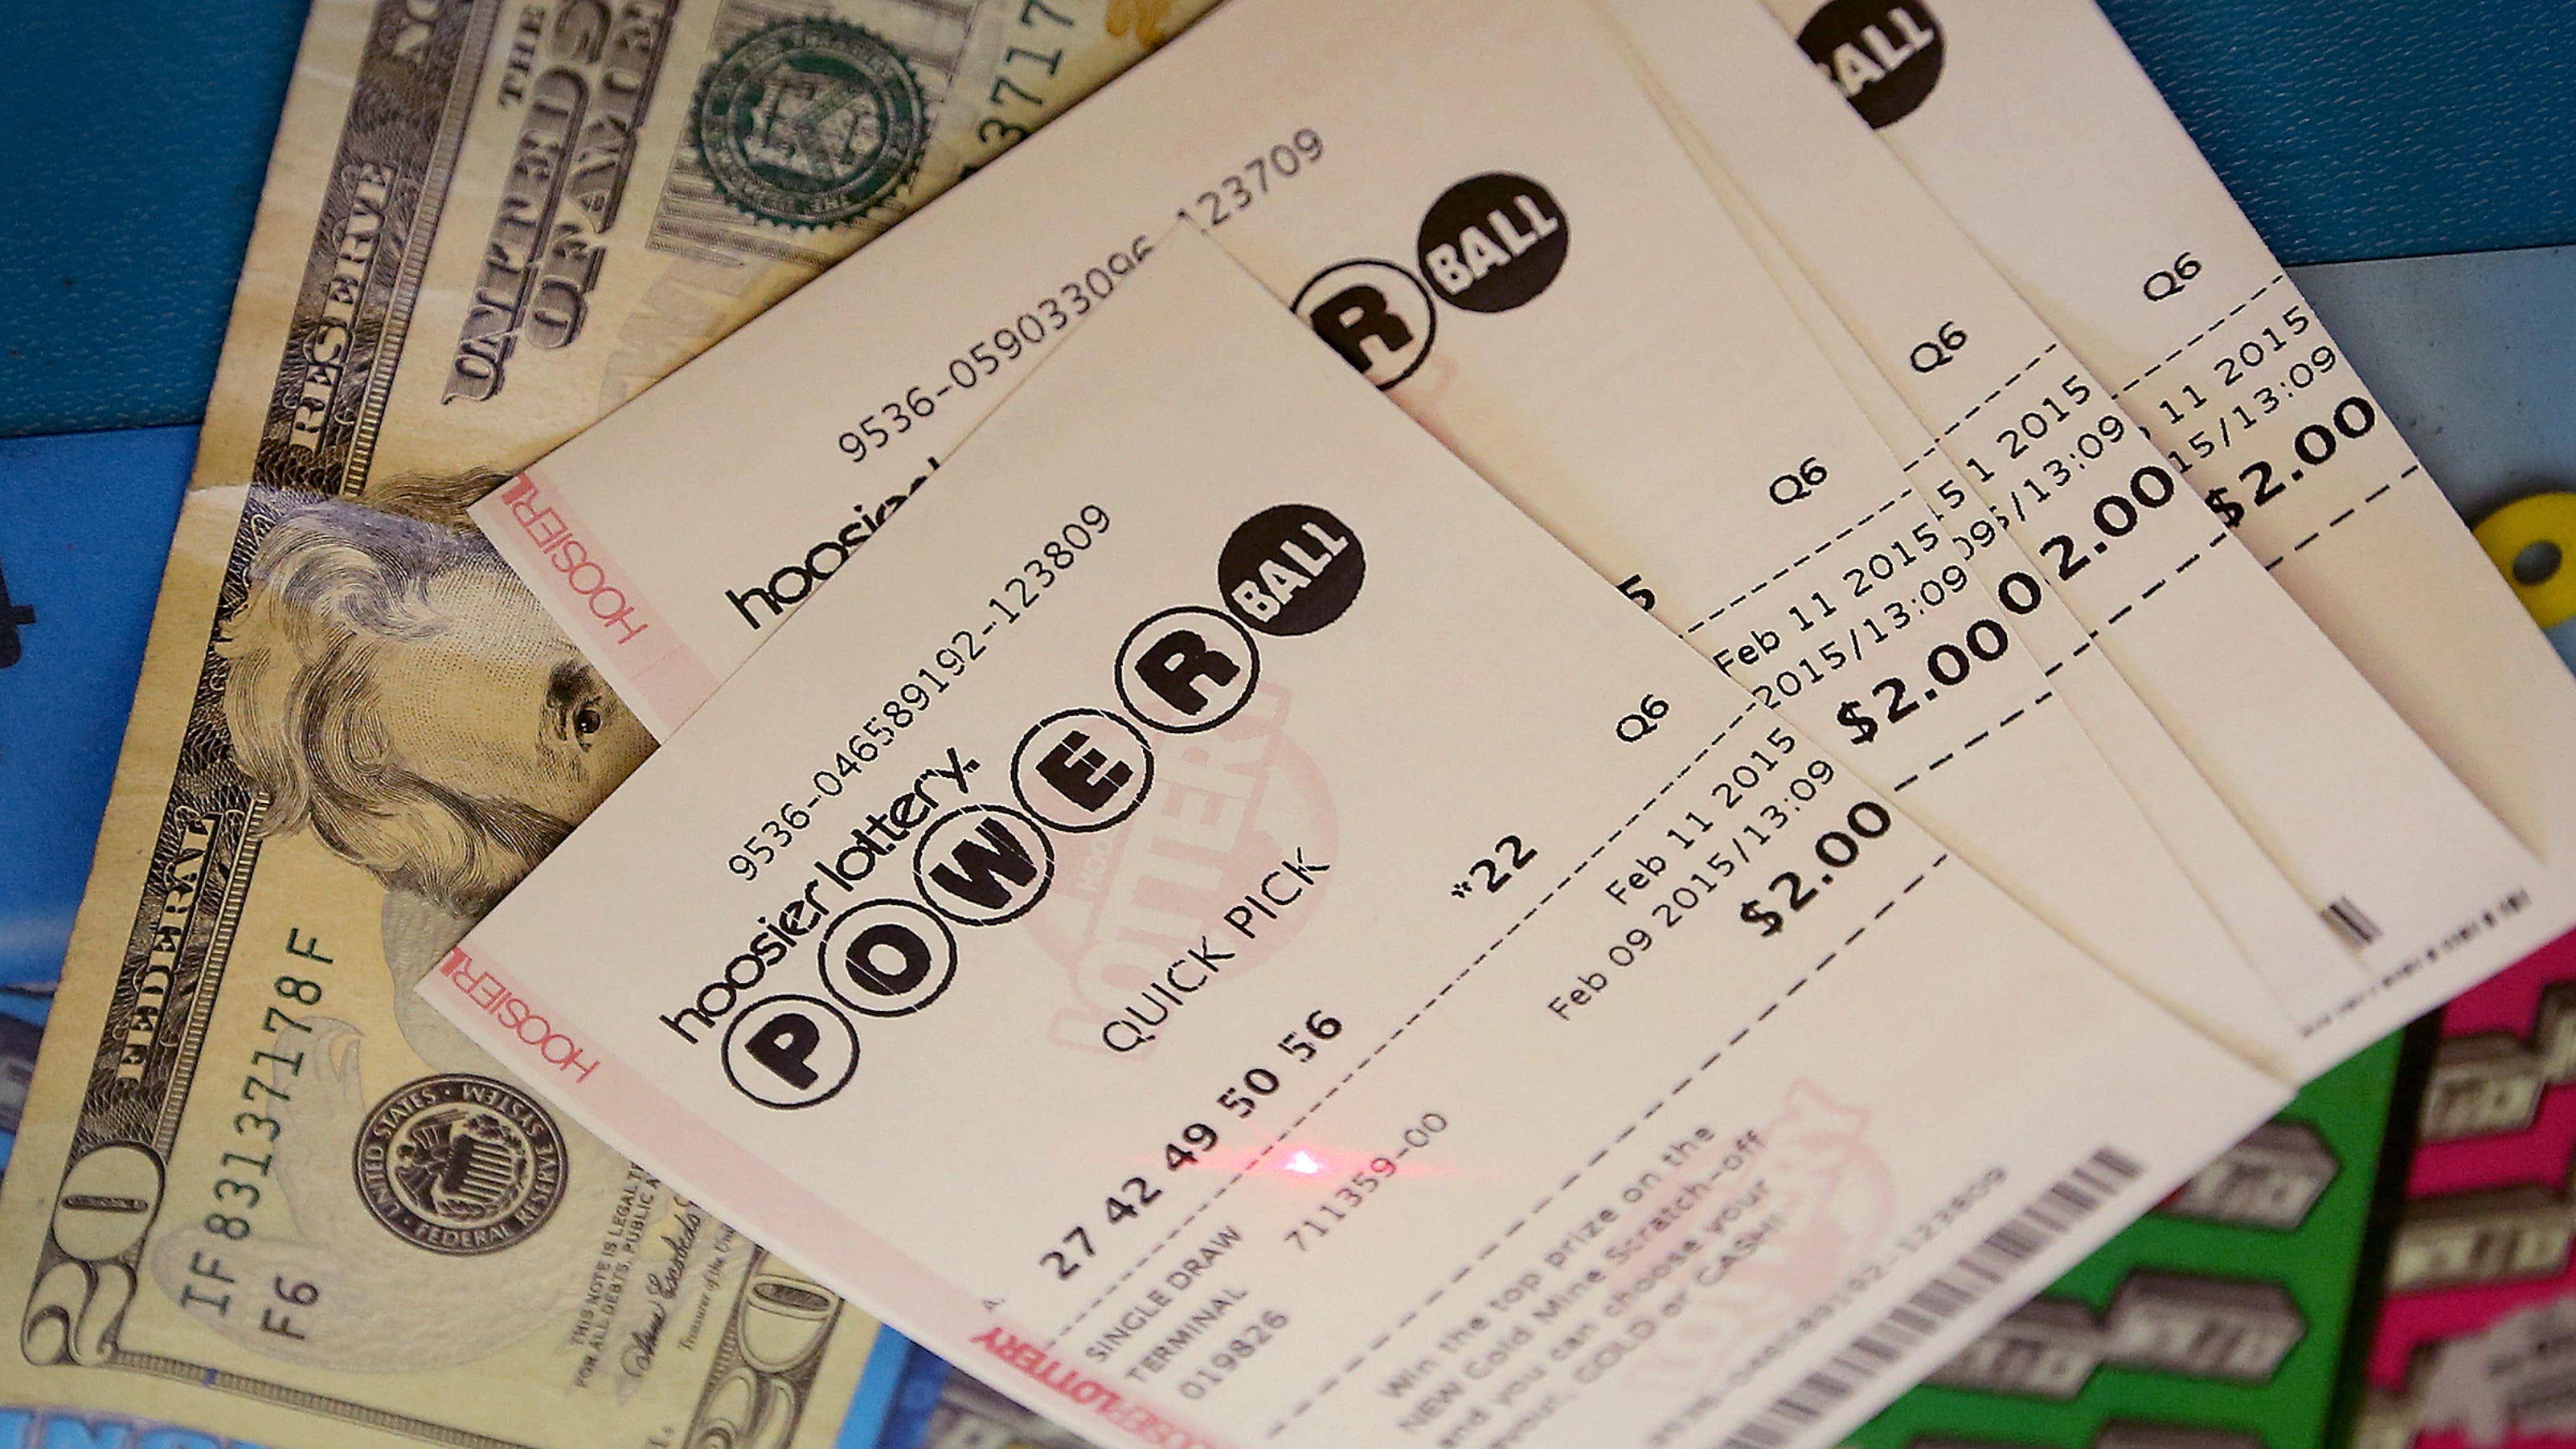 3 winning tickets share Powerball jackpot